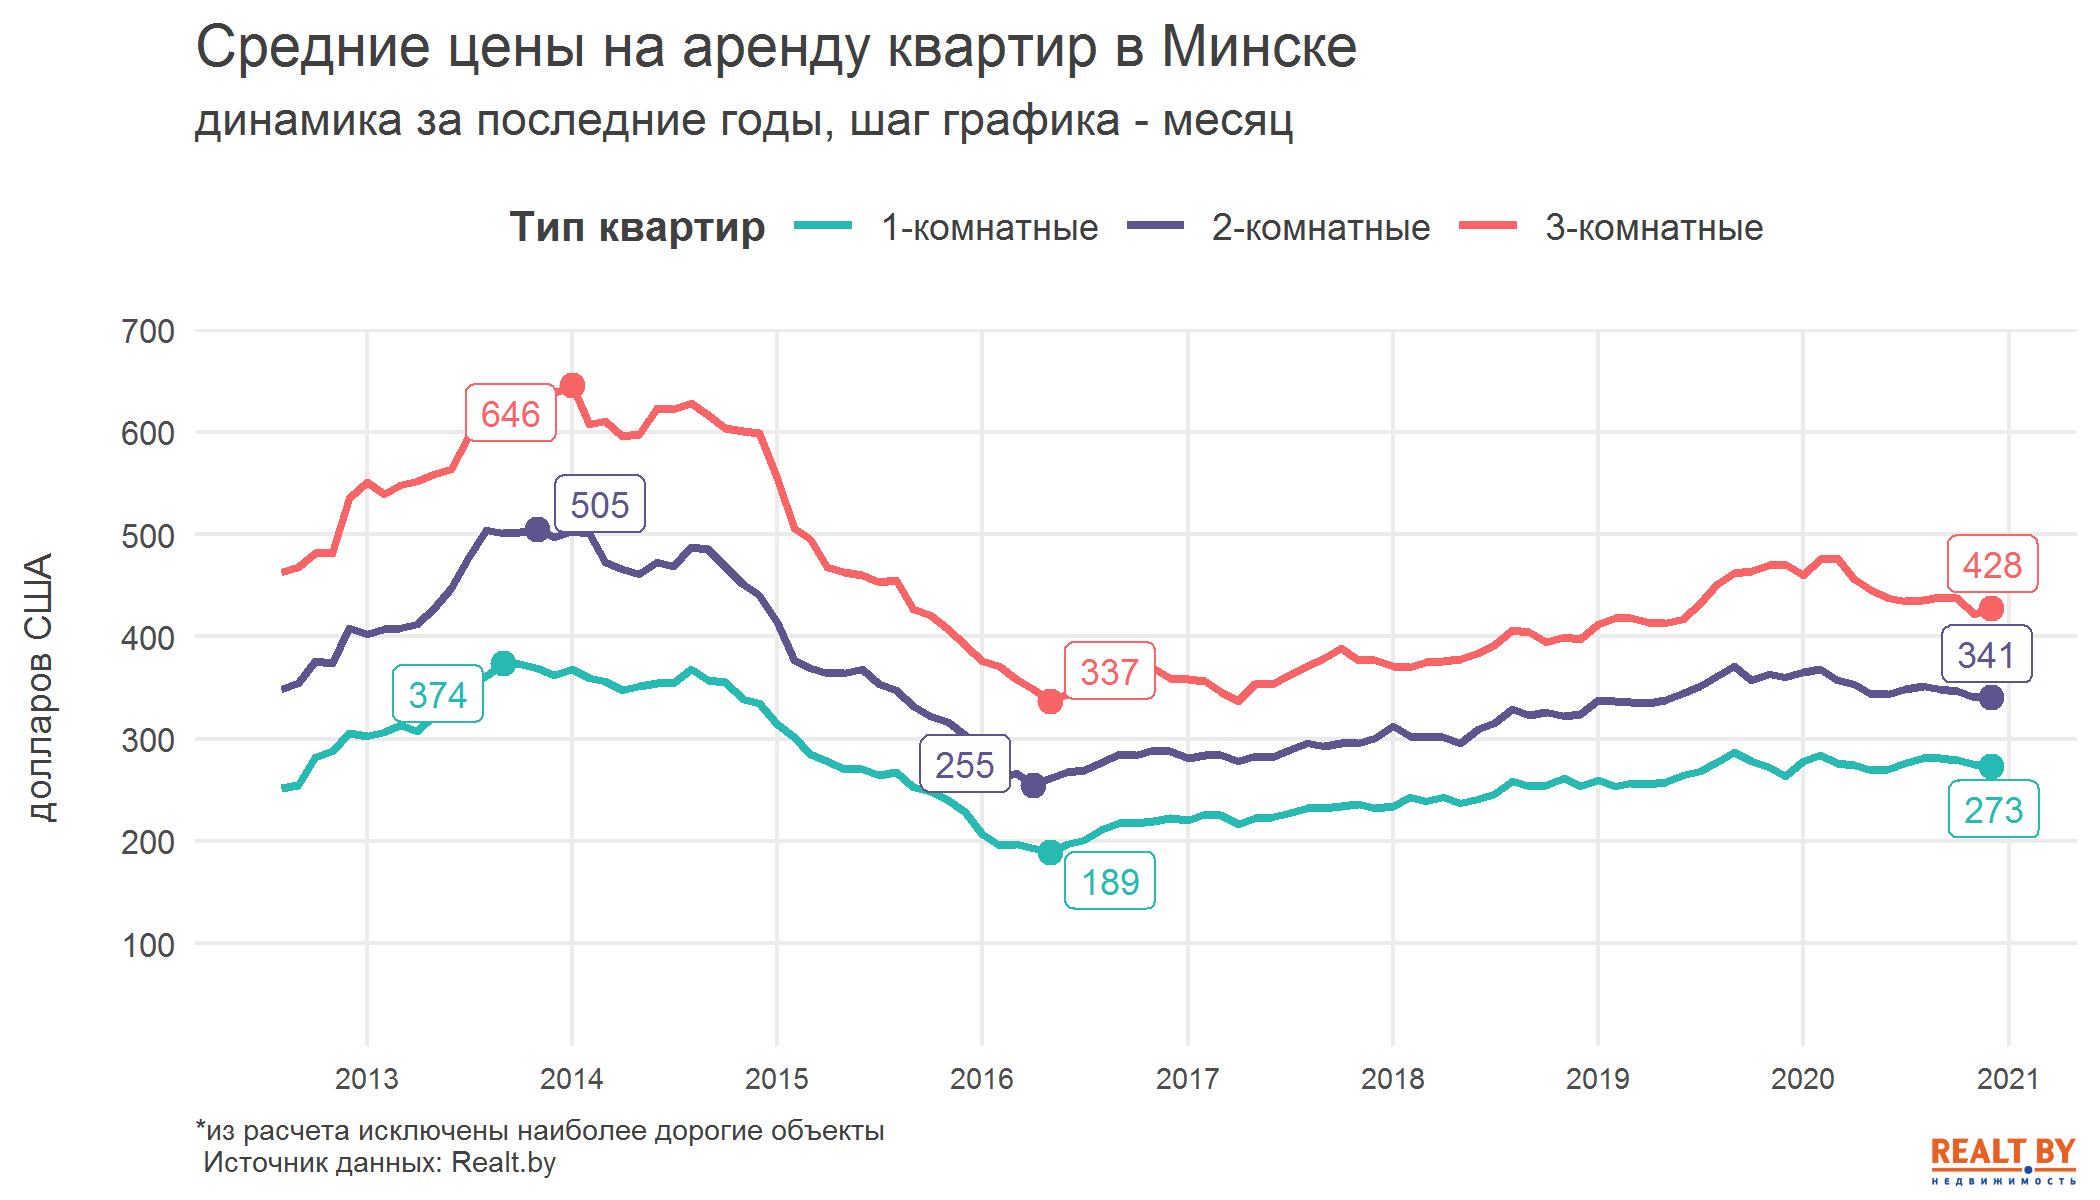 Квартир все больше, но цены не падают. Обзор рынка аренды квартир в Минске за декабрь 2020 года